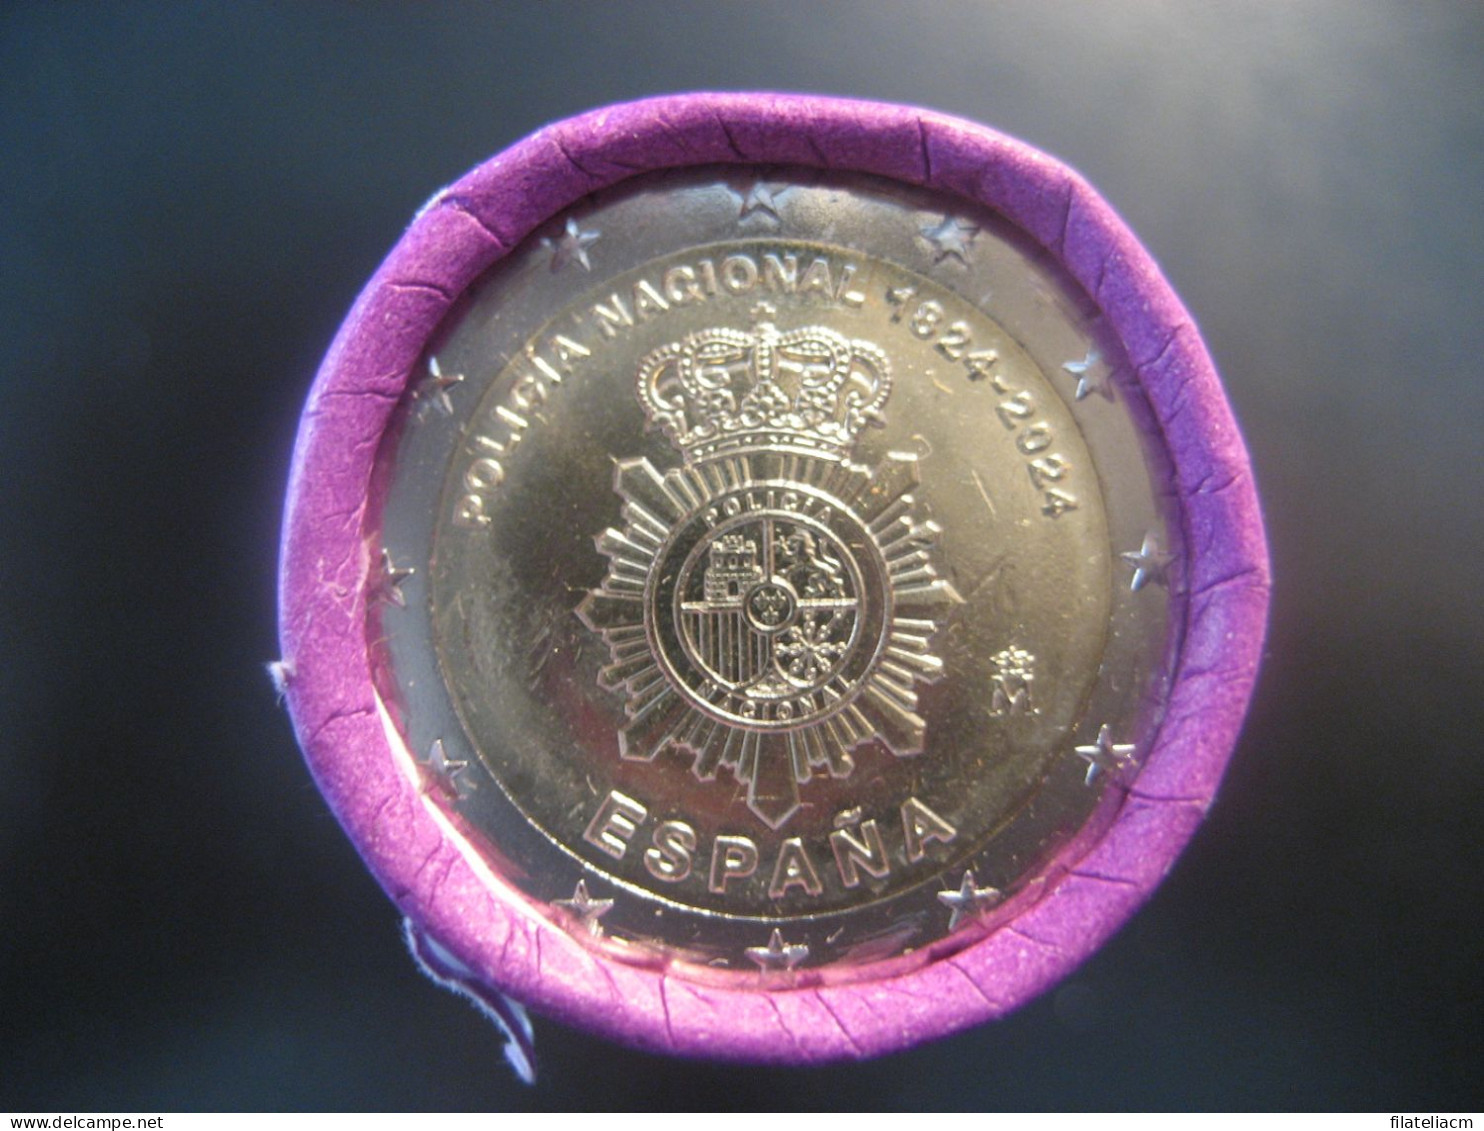 2 EUR 2024 SPAIN Policia Nacional POLICE Uncirculated From Cartridge Euro Coin - Espagne